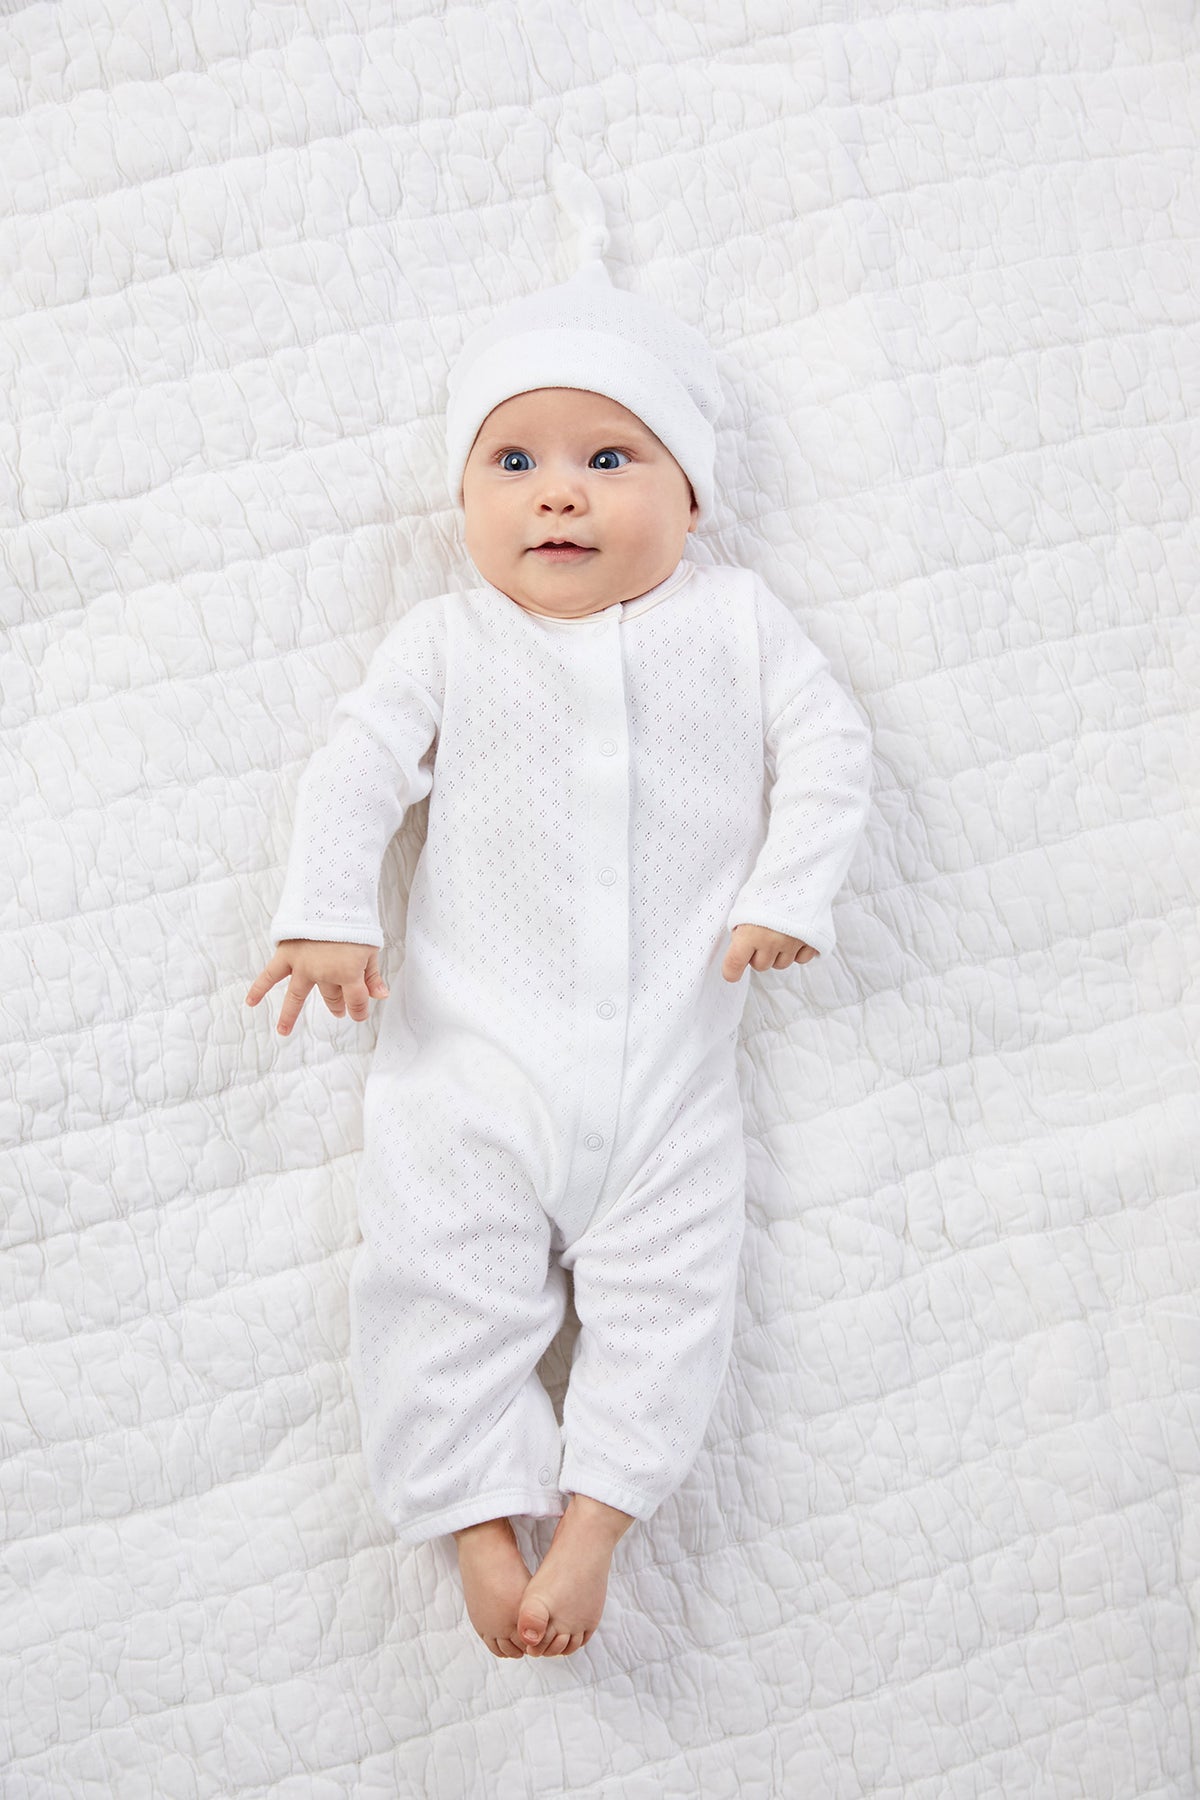 A baby wearing a white dress